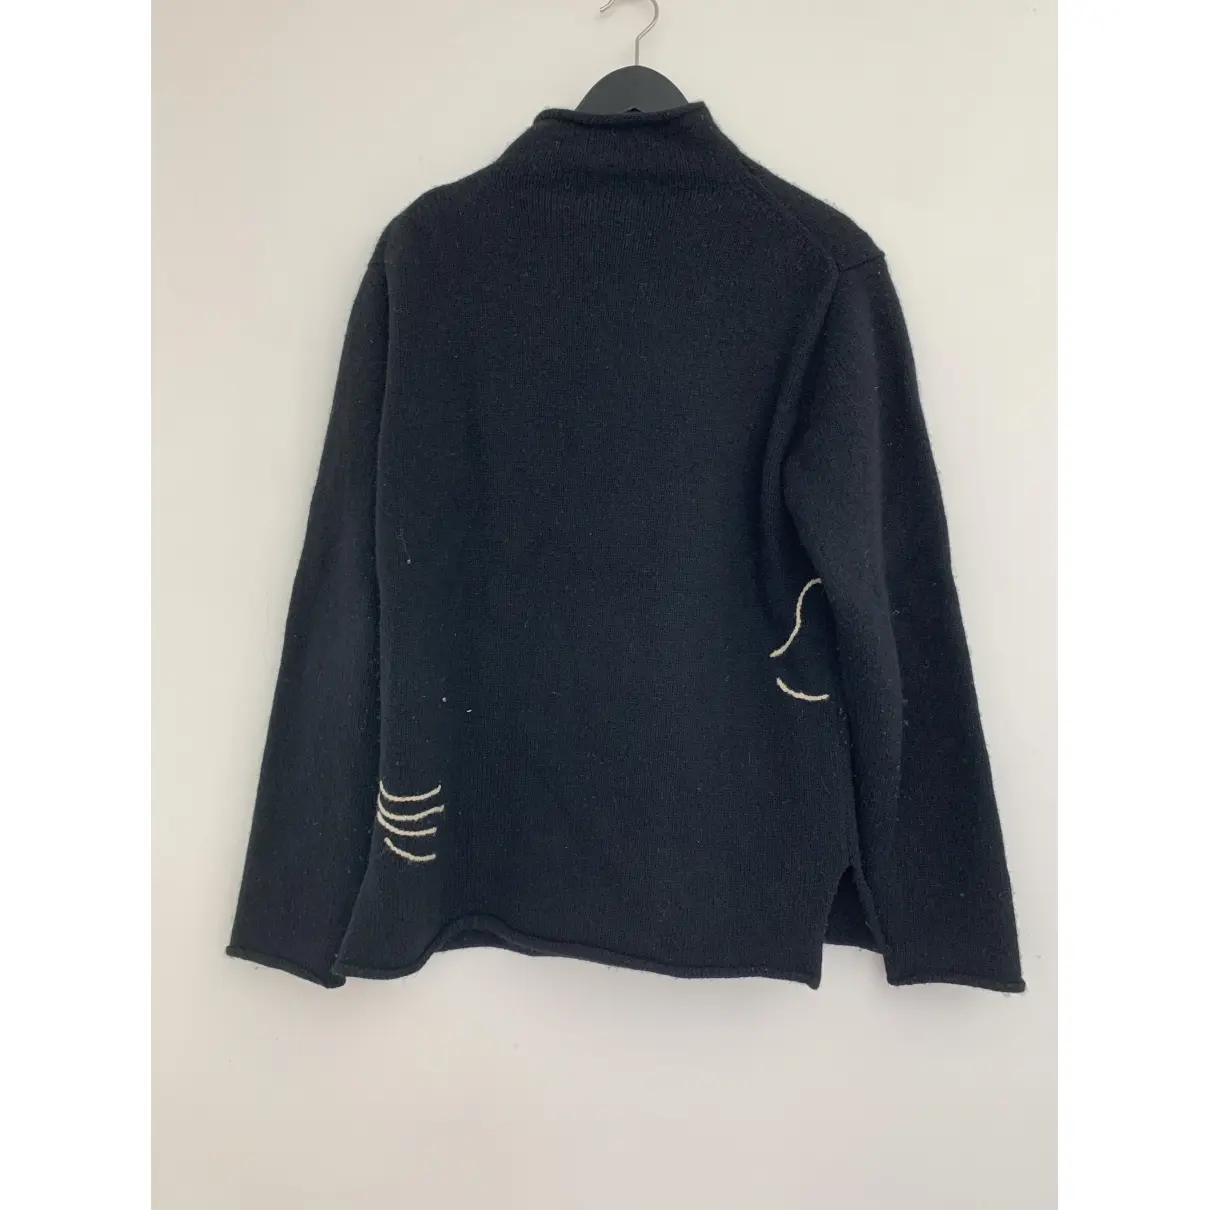 Yohji Yamamoto Black Cotton Knitwear & Sweatshirt for sale - Vintage